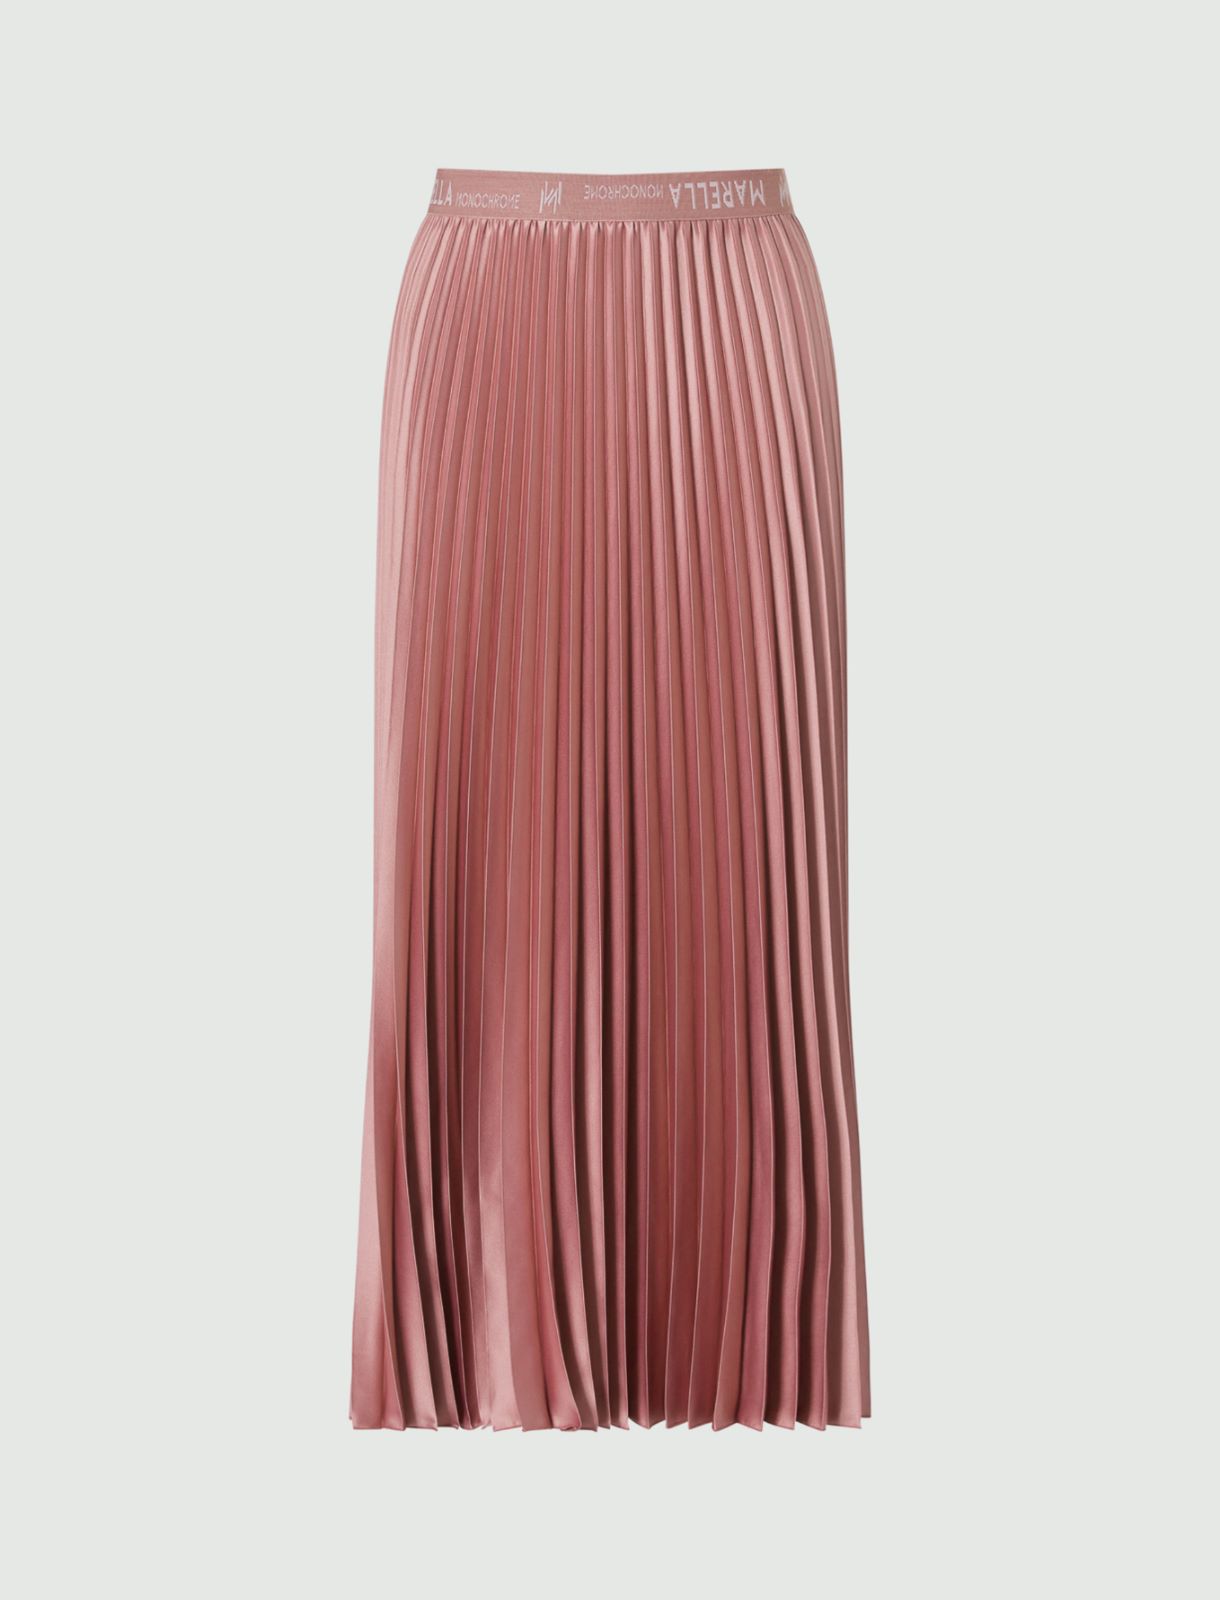 Pleated skirt - Antique rose - Marina Rinaldi - 5